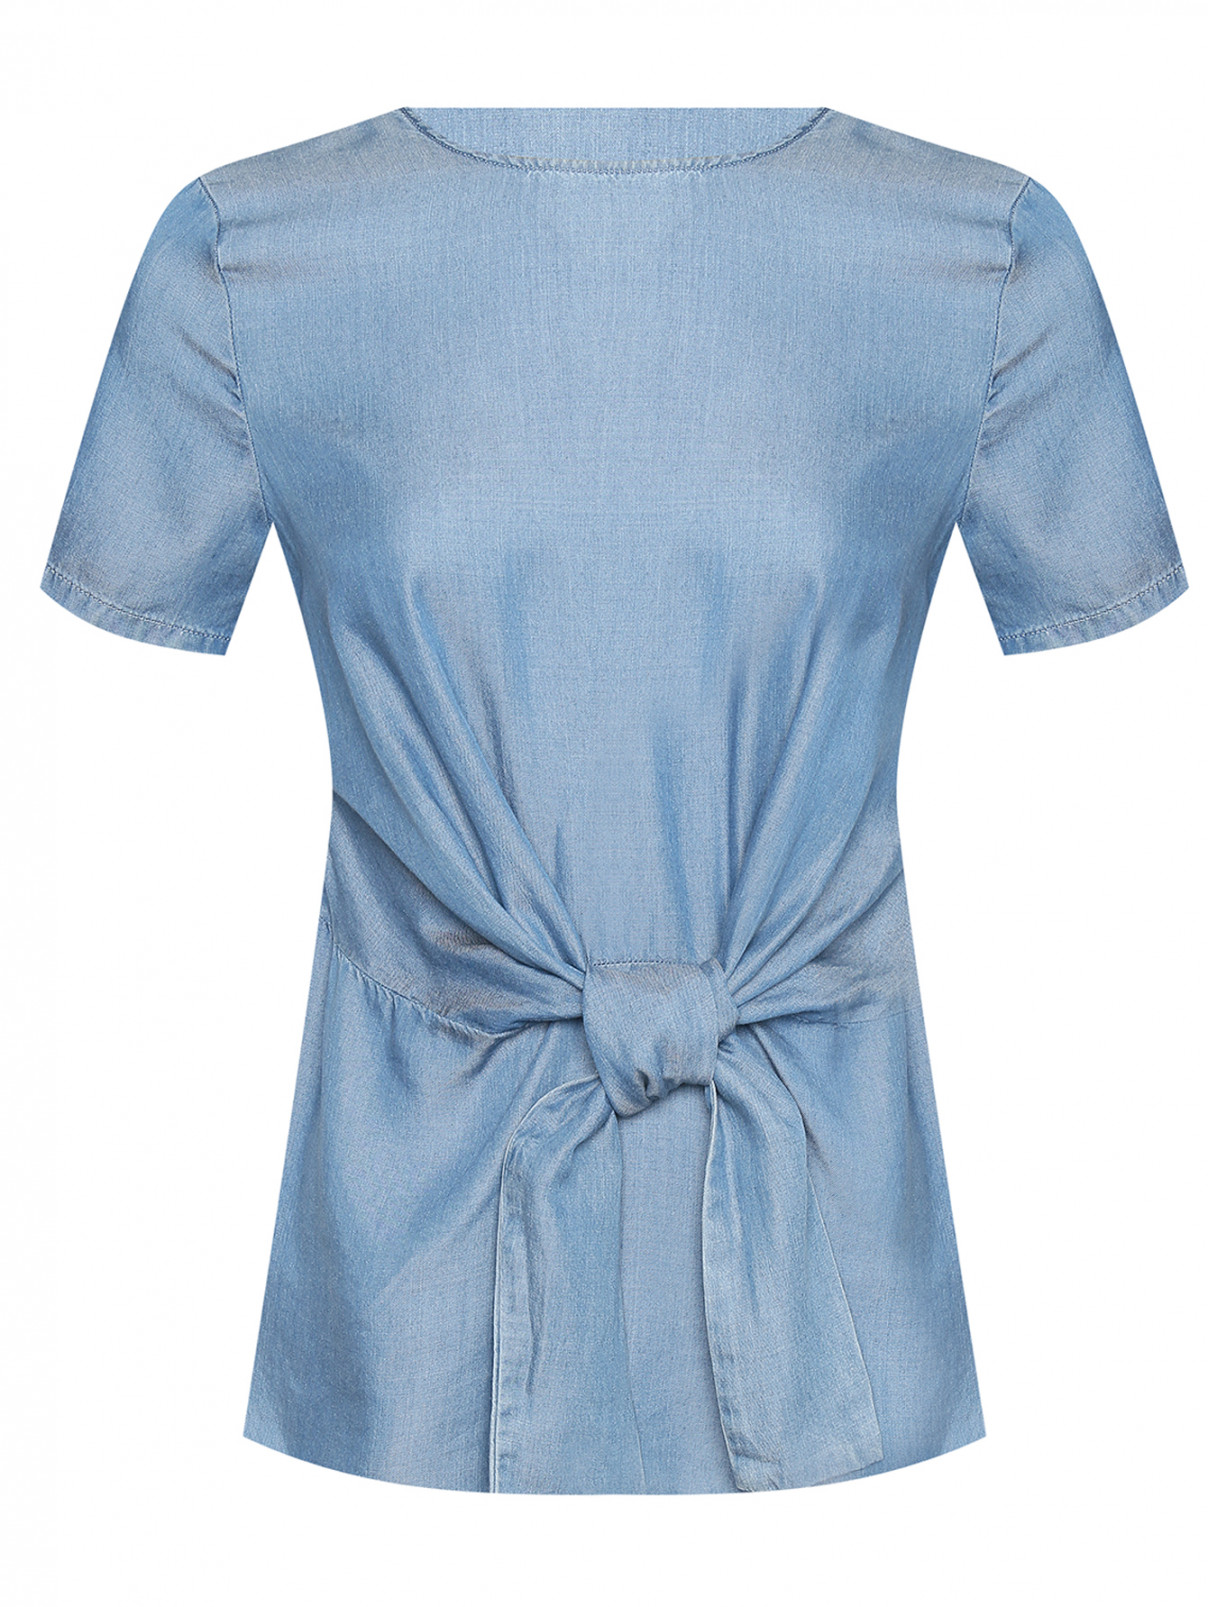 Блуза с узлом на талии и короткими рукавами Michael by MK  –  Общий вид  – Цвет:  Синий